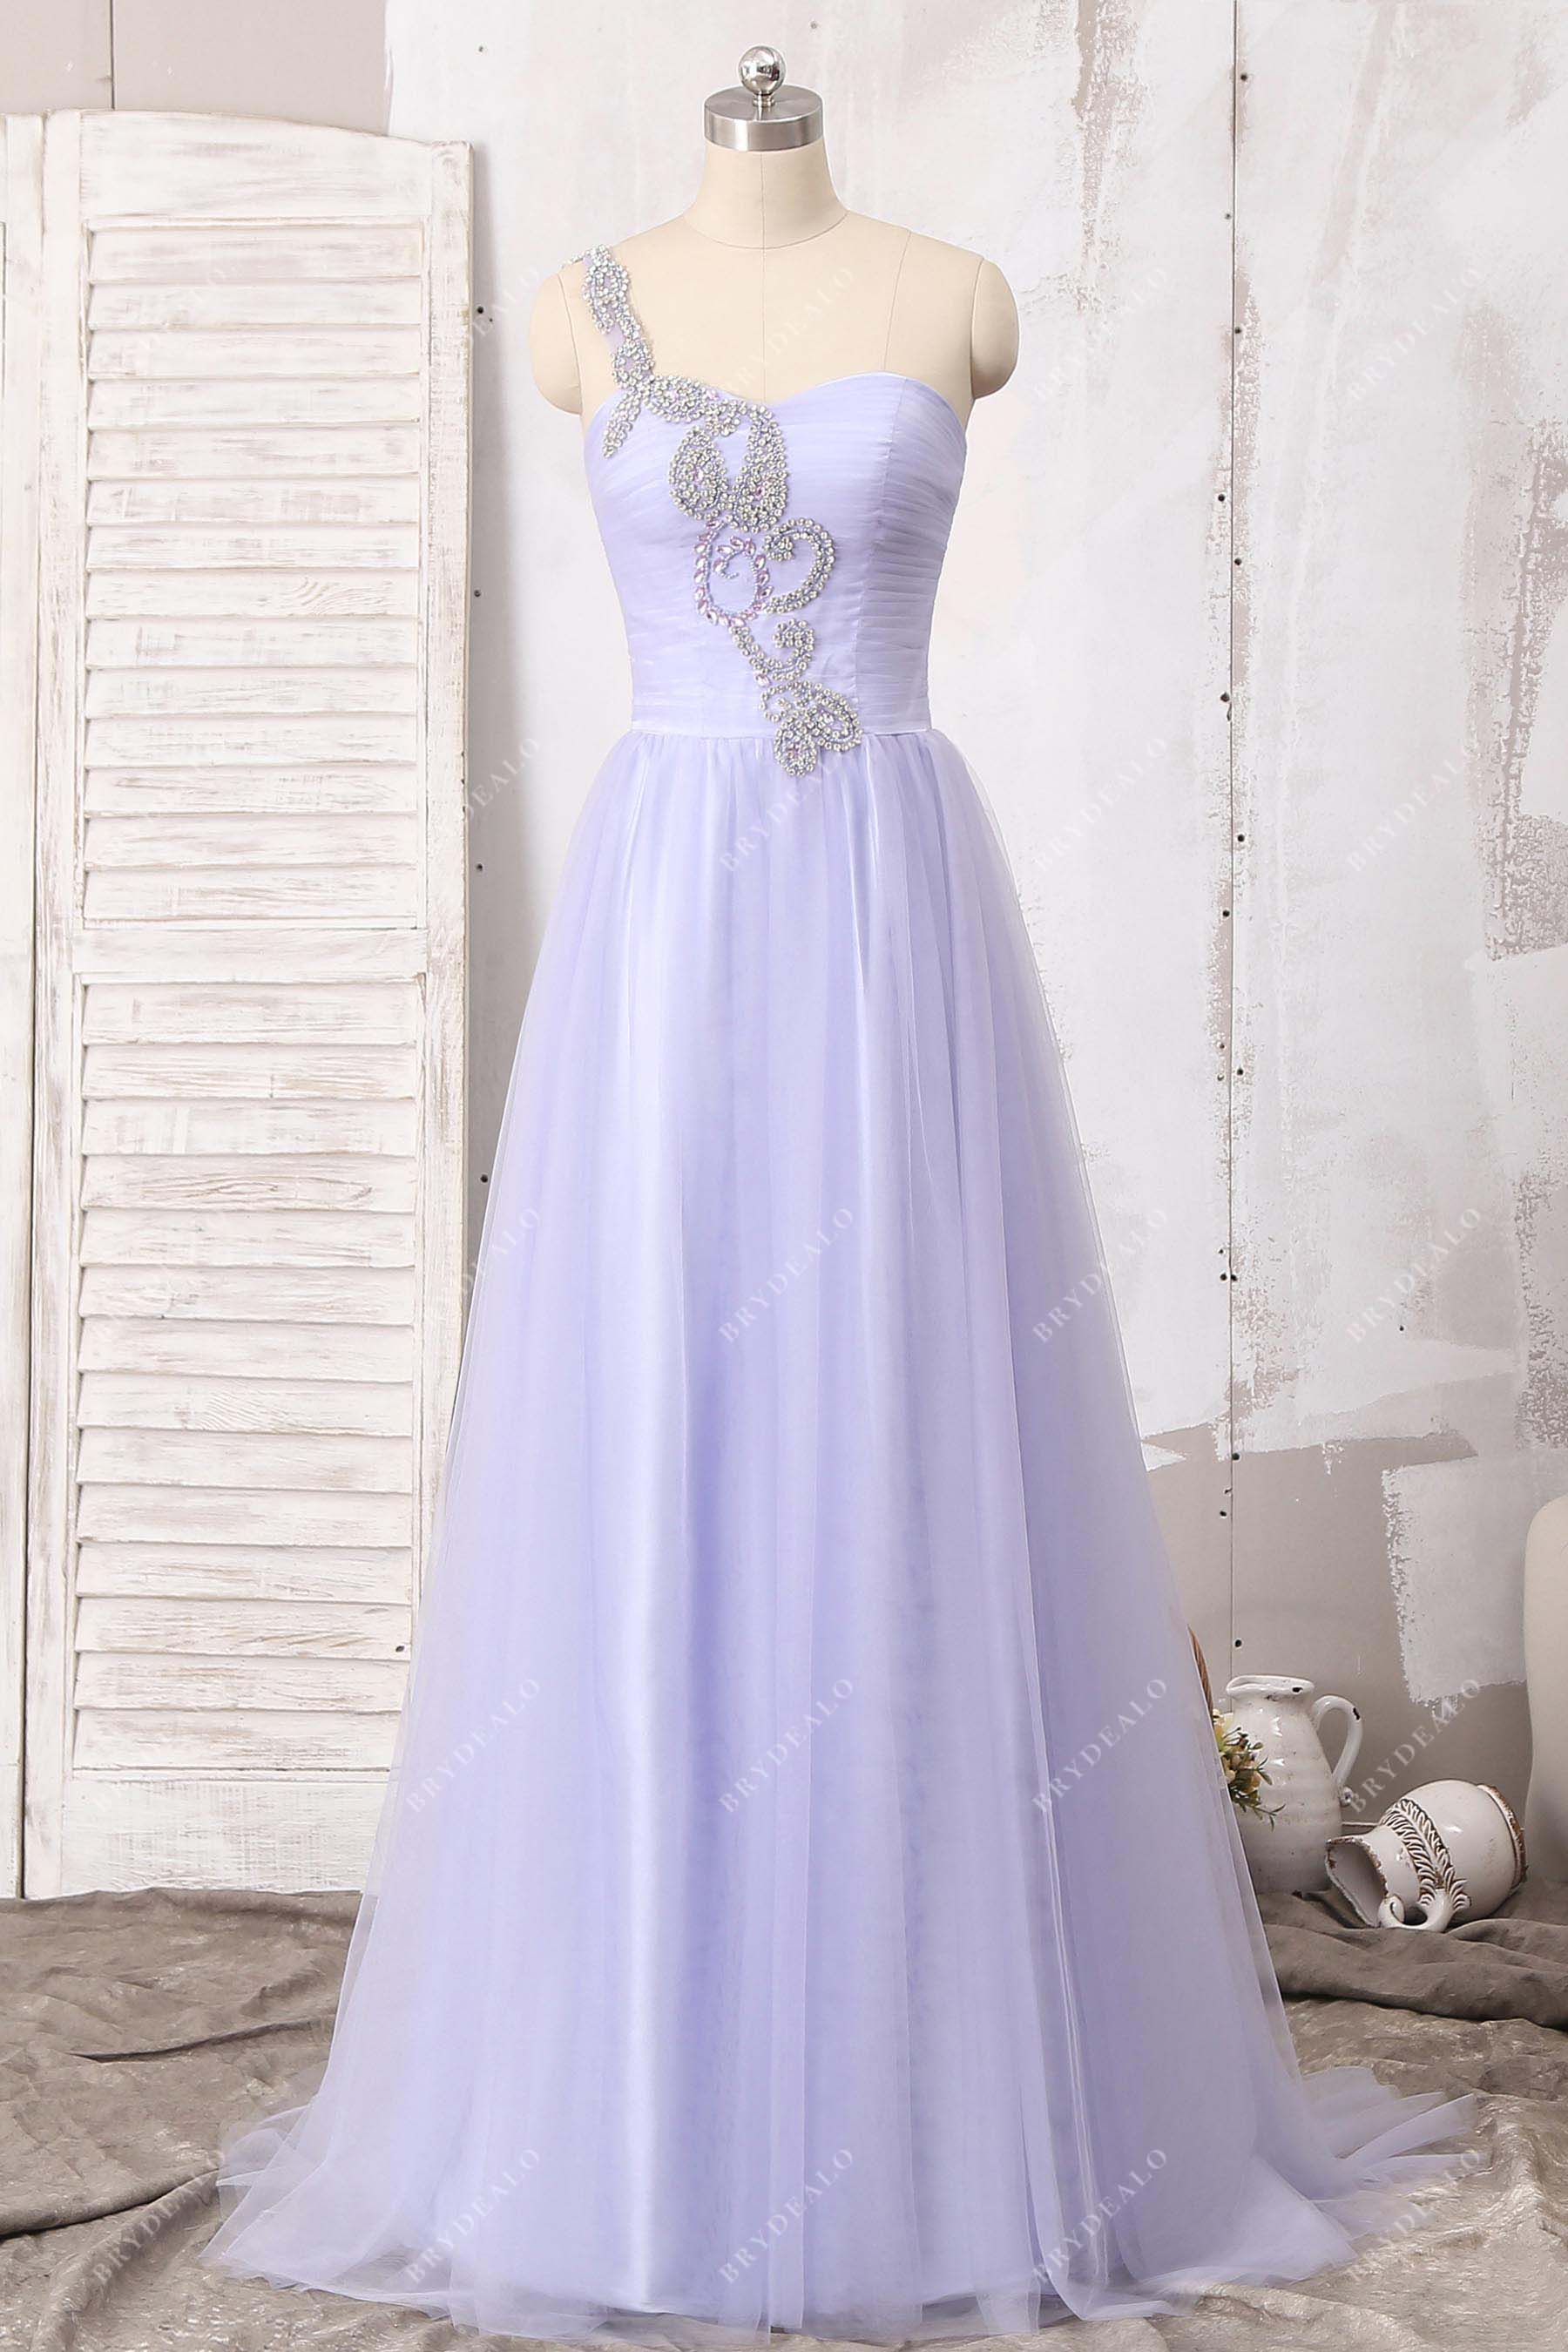 lilac tulle embellished dress